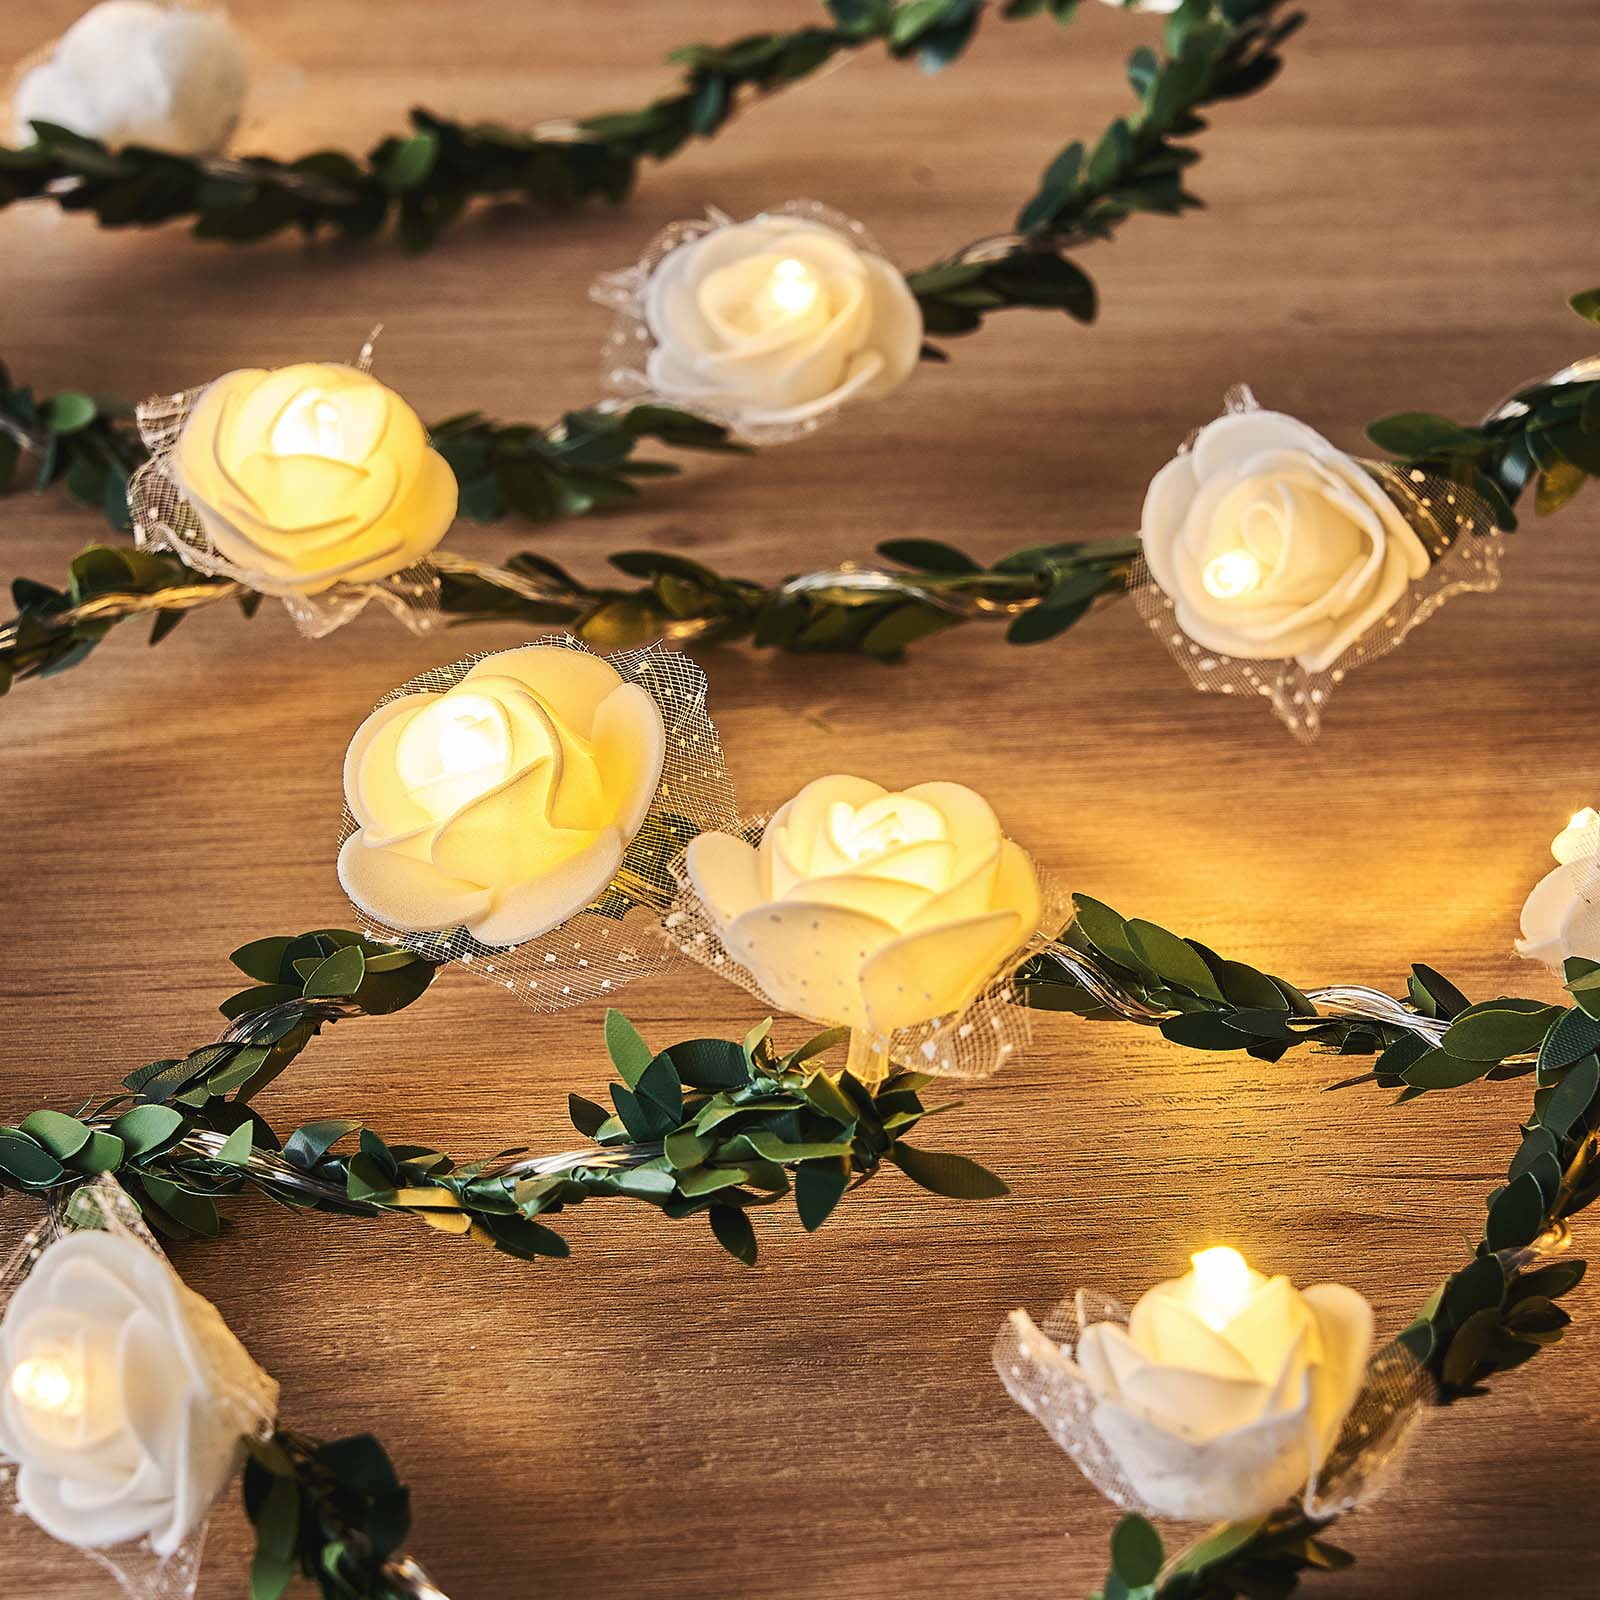 Cool white LED Rose Flower Christmas Wedding Party Fairy String Lights Lamp GW 